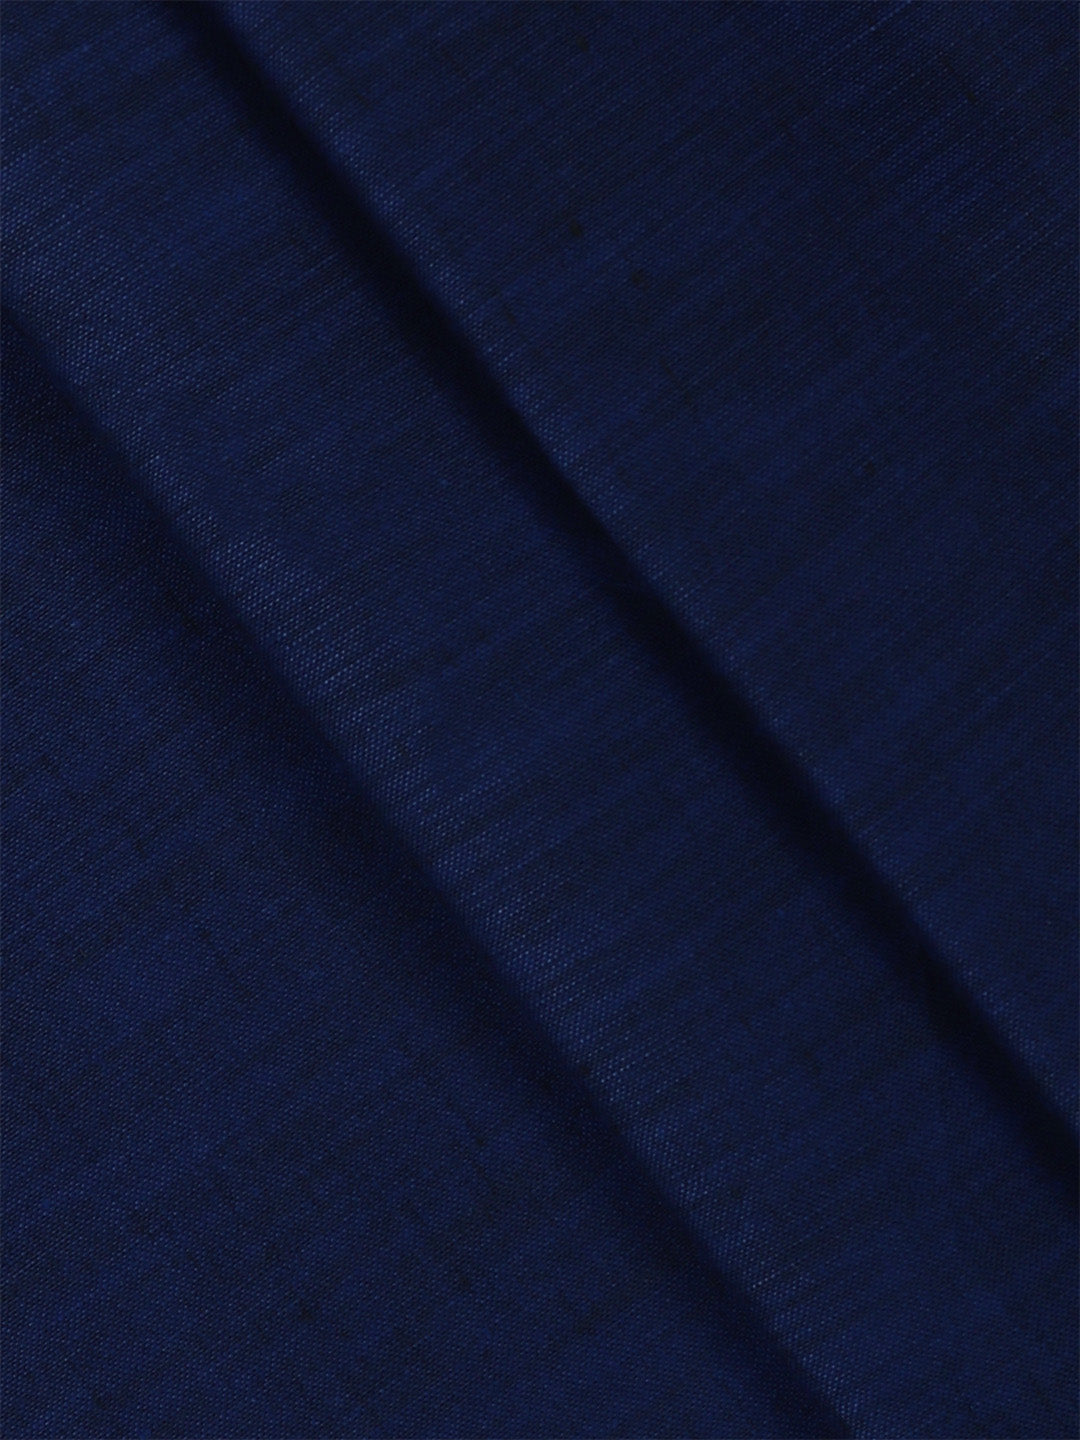 Cotton Blend Dark Blue Colour Plain Shirt Fabric Infinity